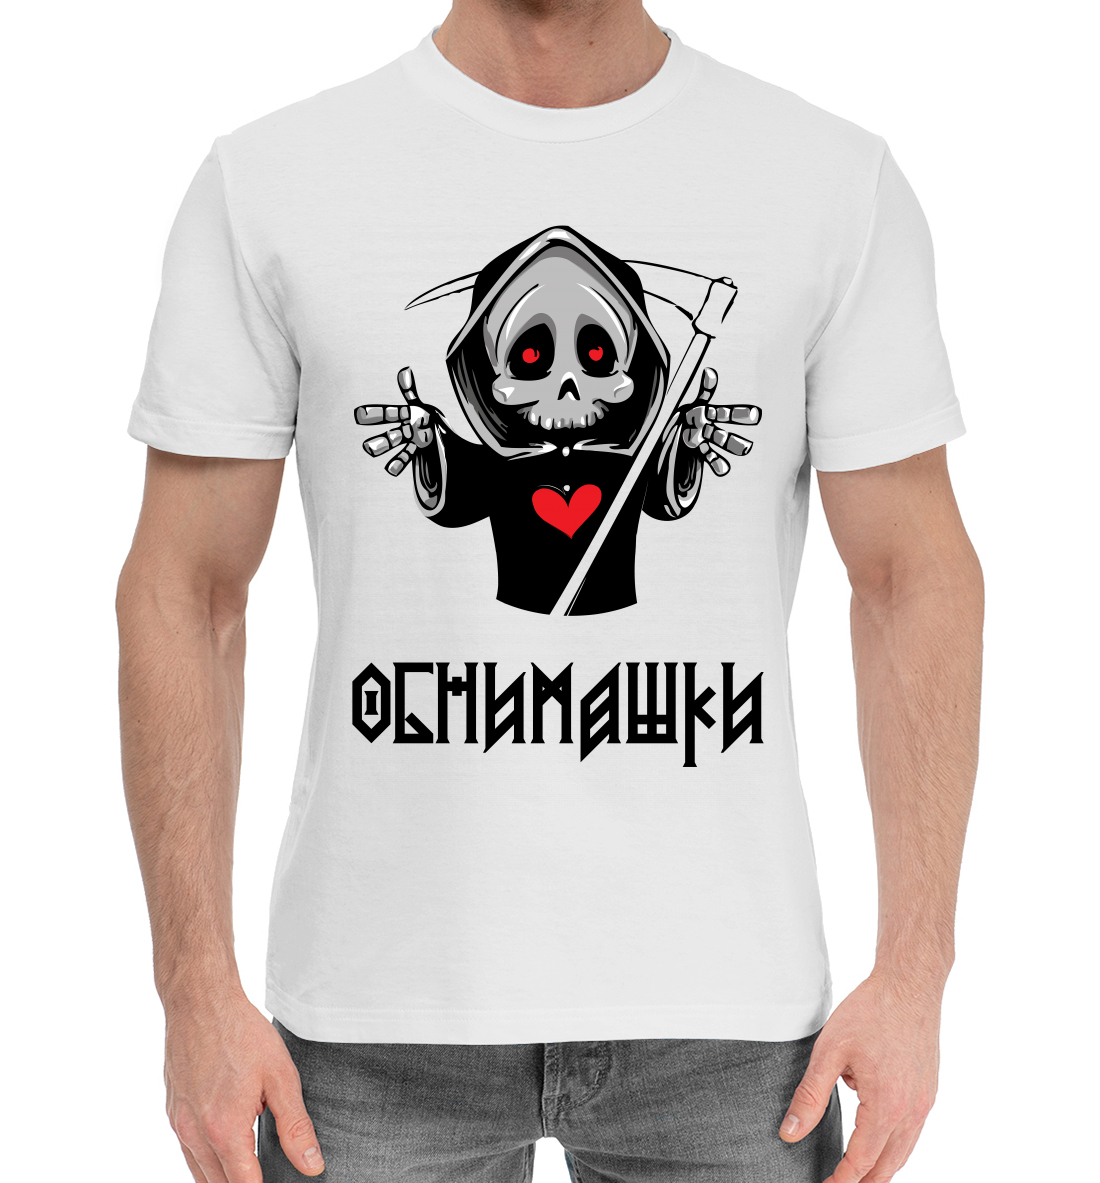 Мужская Хлопковая футболка с принтом Обнимашки, артикул HAL-191905-hfu-2mp